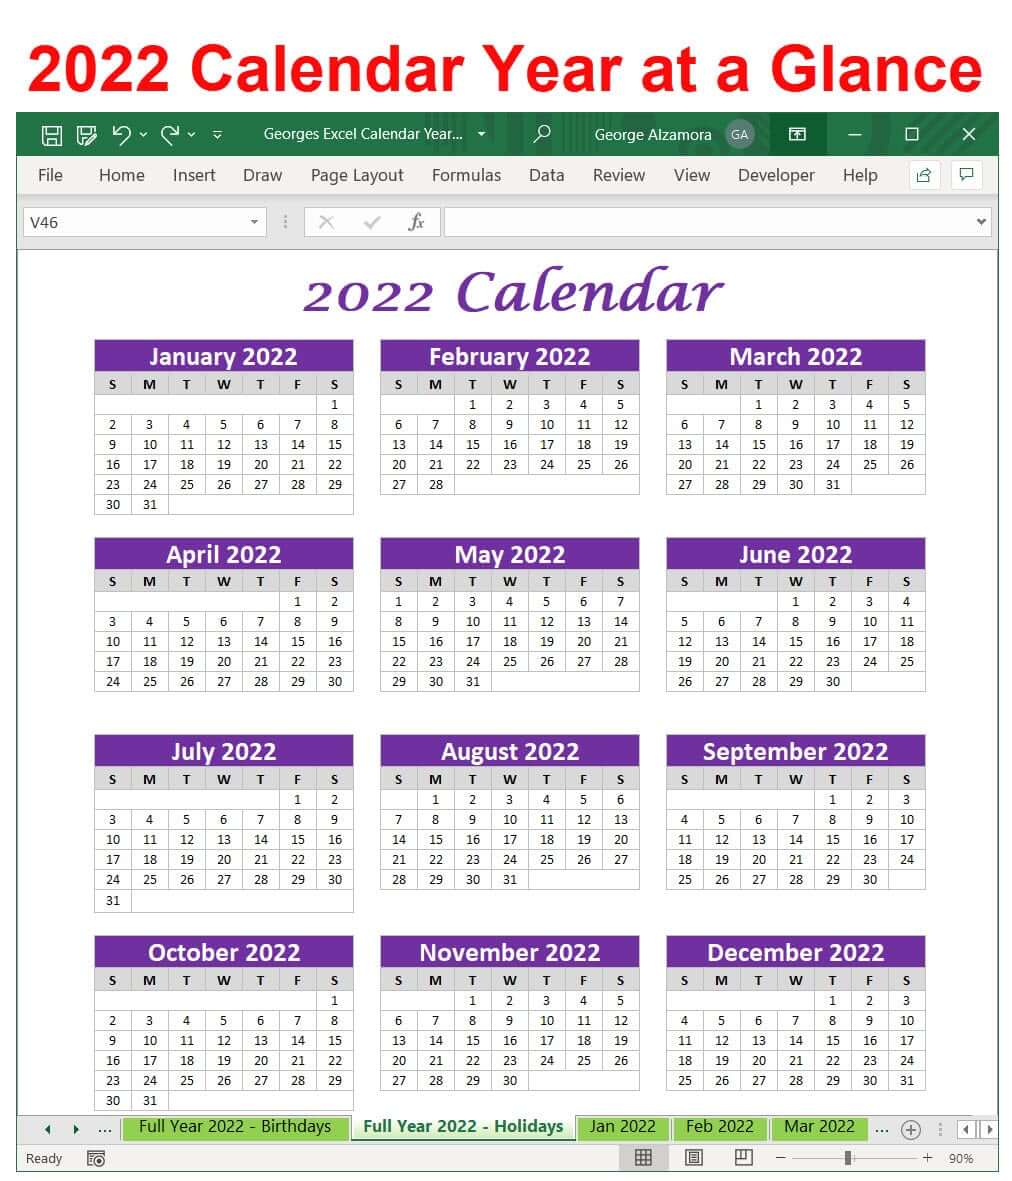 2022 calendar year at a glance